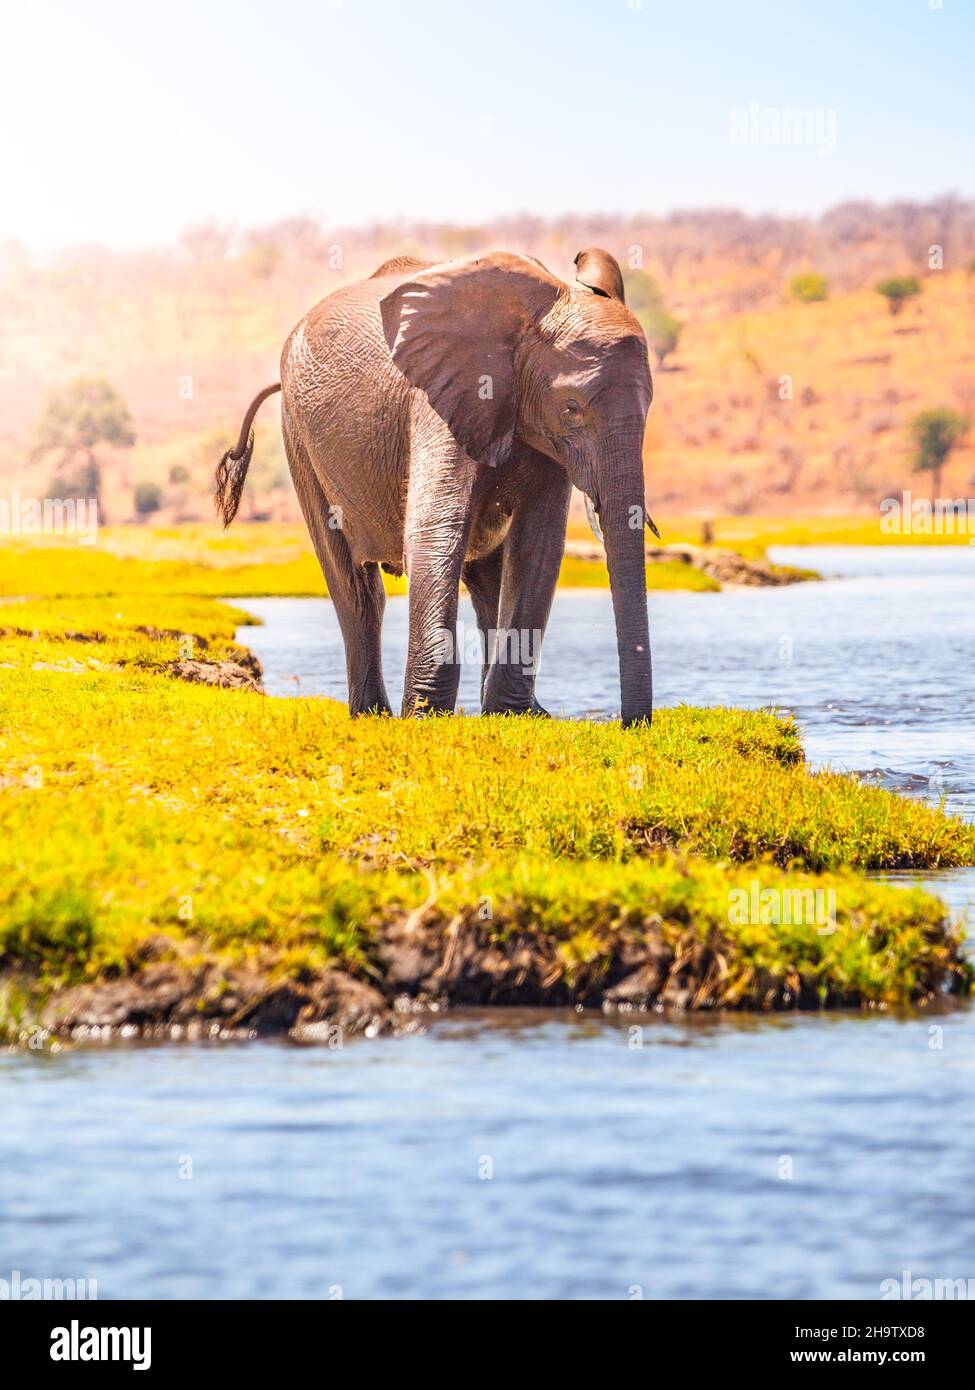 Afrikanischer Elefant am Fluss Stockfoto